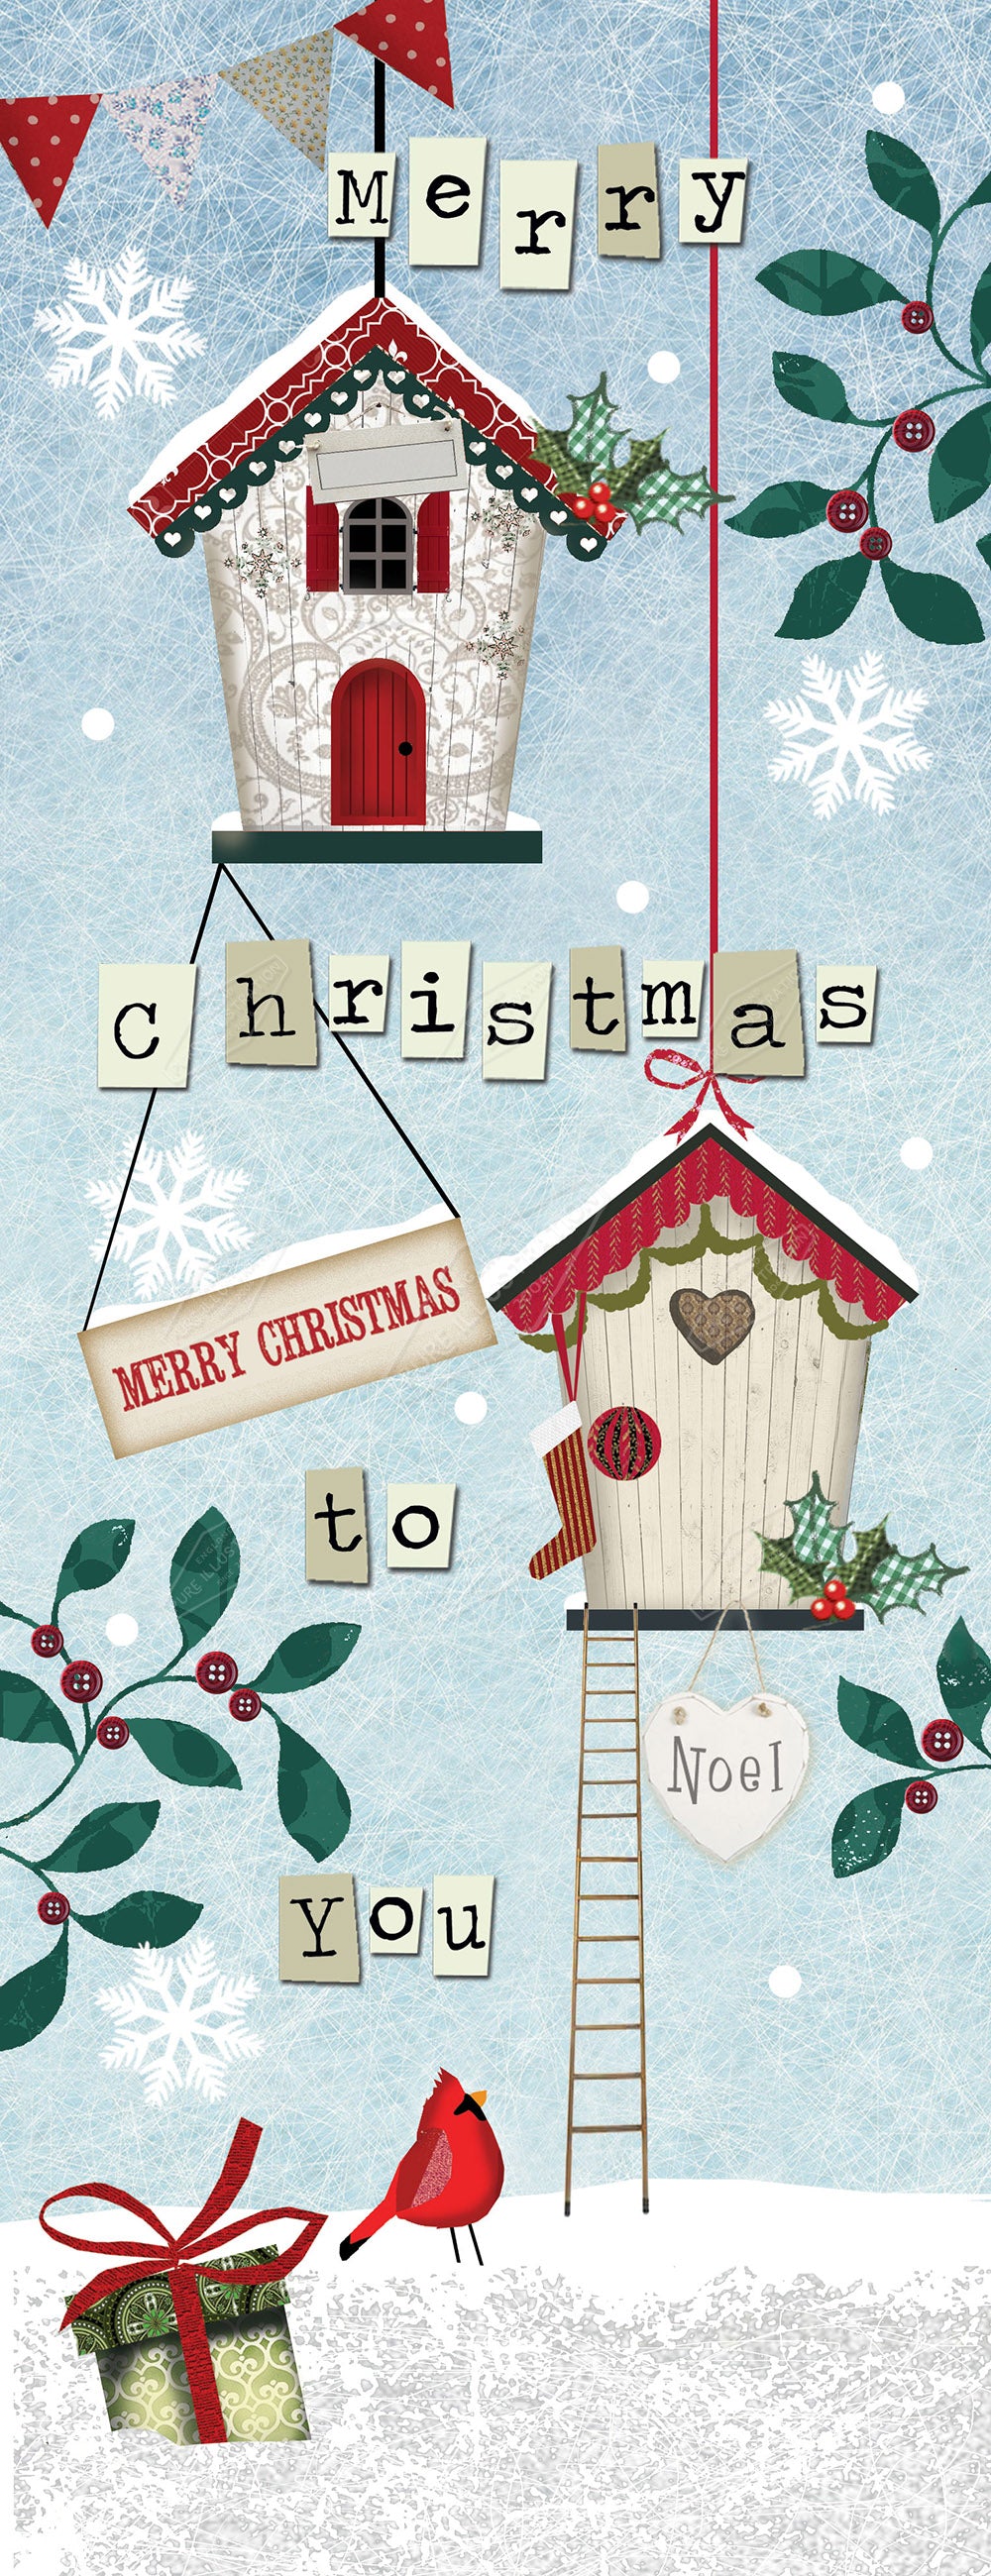 00027783DEV - Deva Evans is represented by Pure Art Licensing Agency - Christmas Greeting Card Design